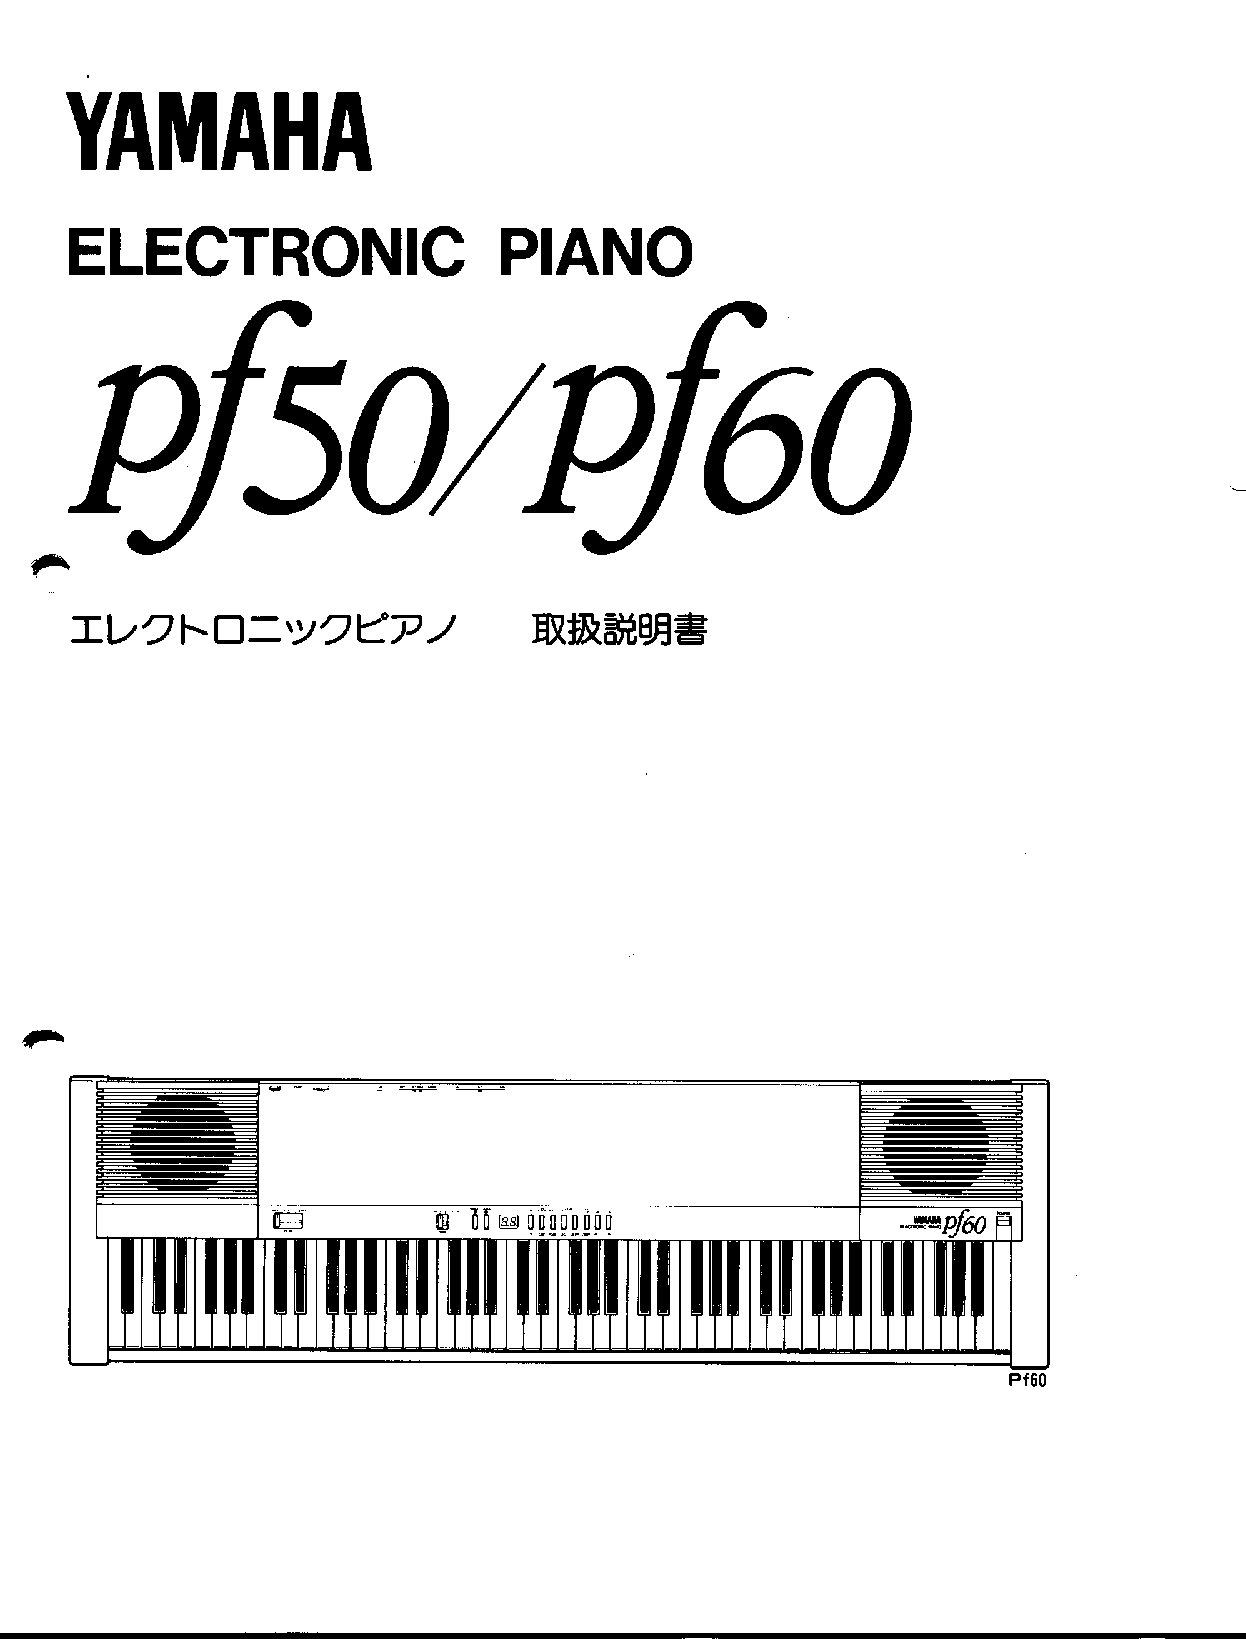 Yamaha pf50, pf60 User Manual